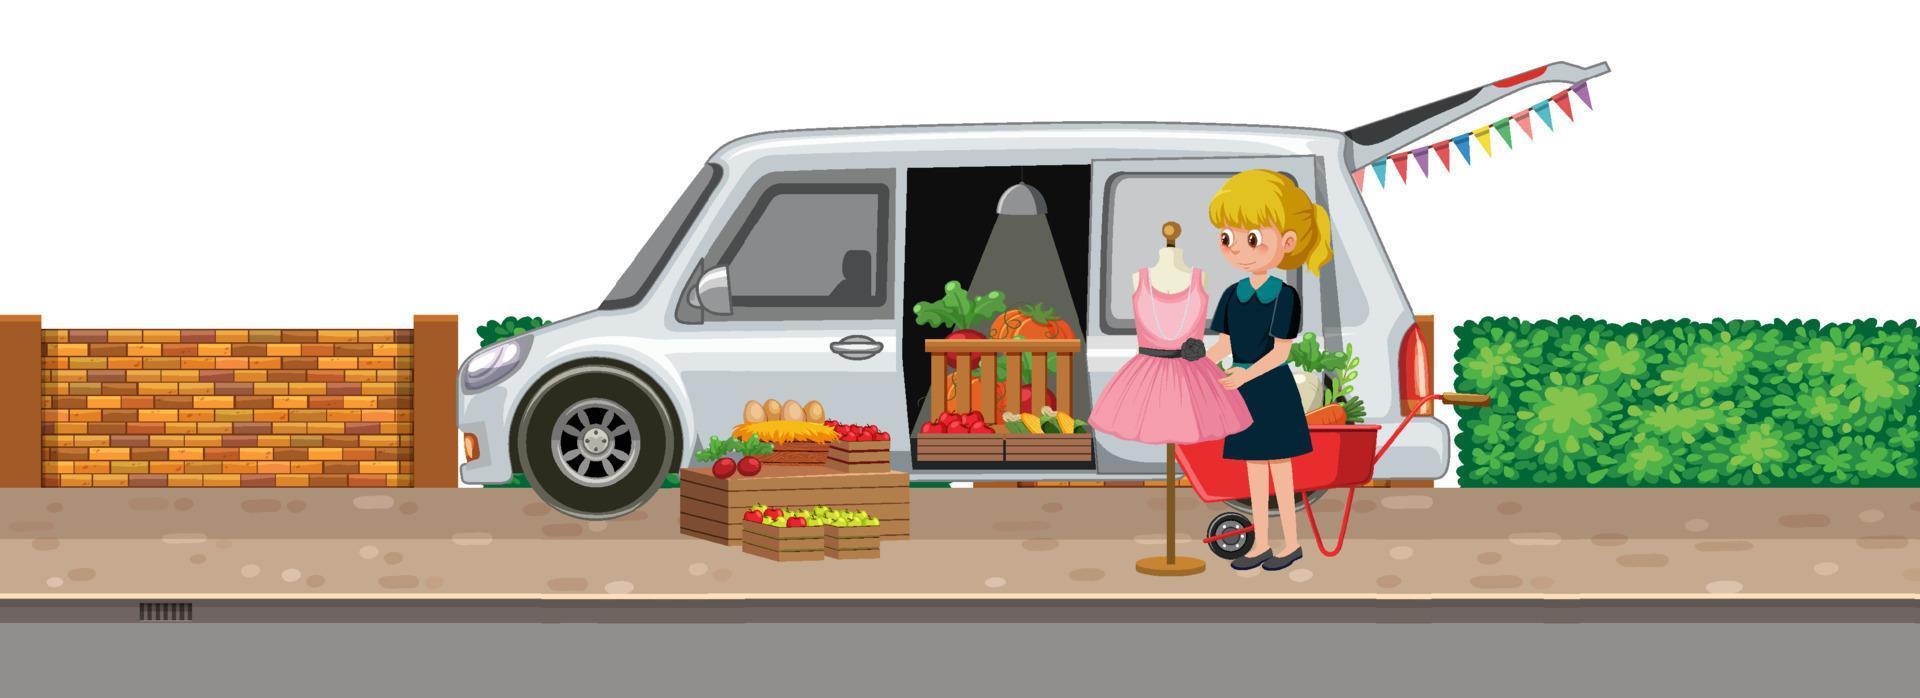 Woman standing by vegetable van vector